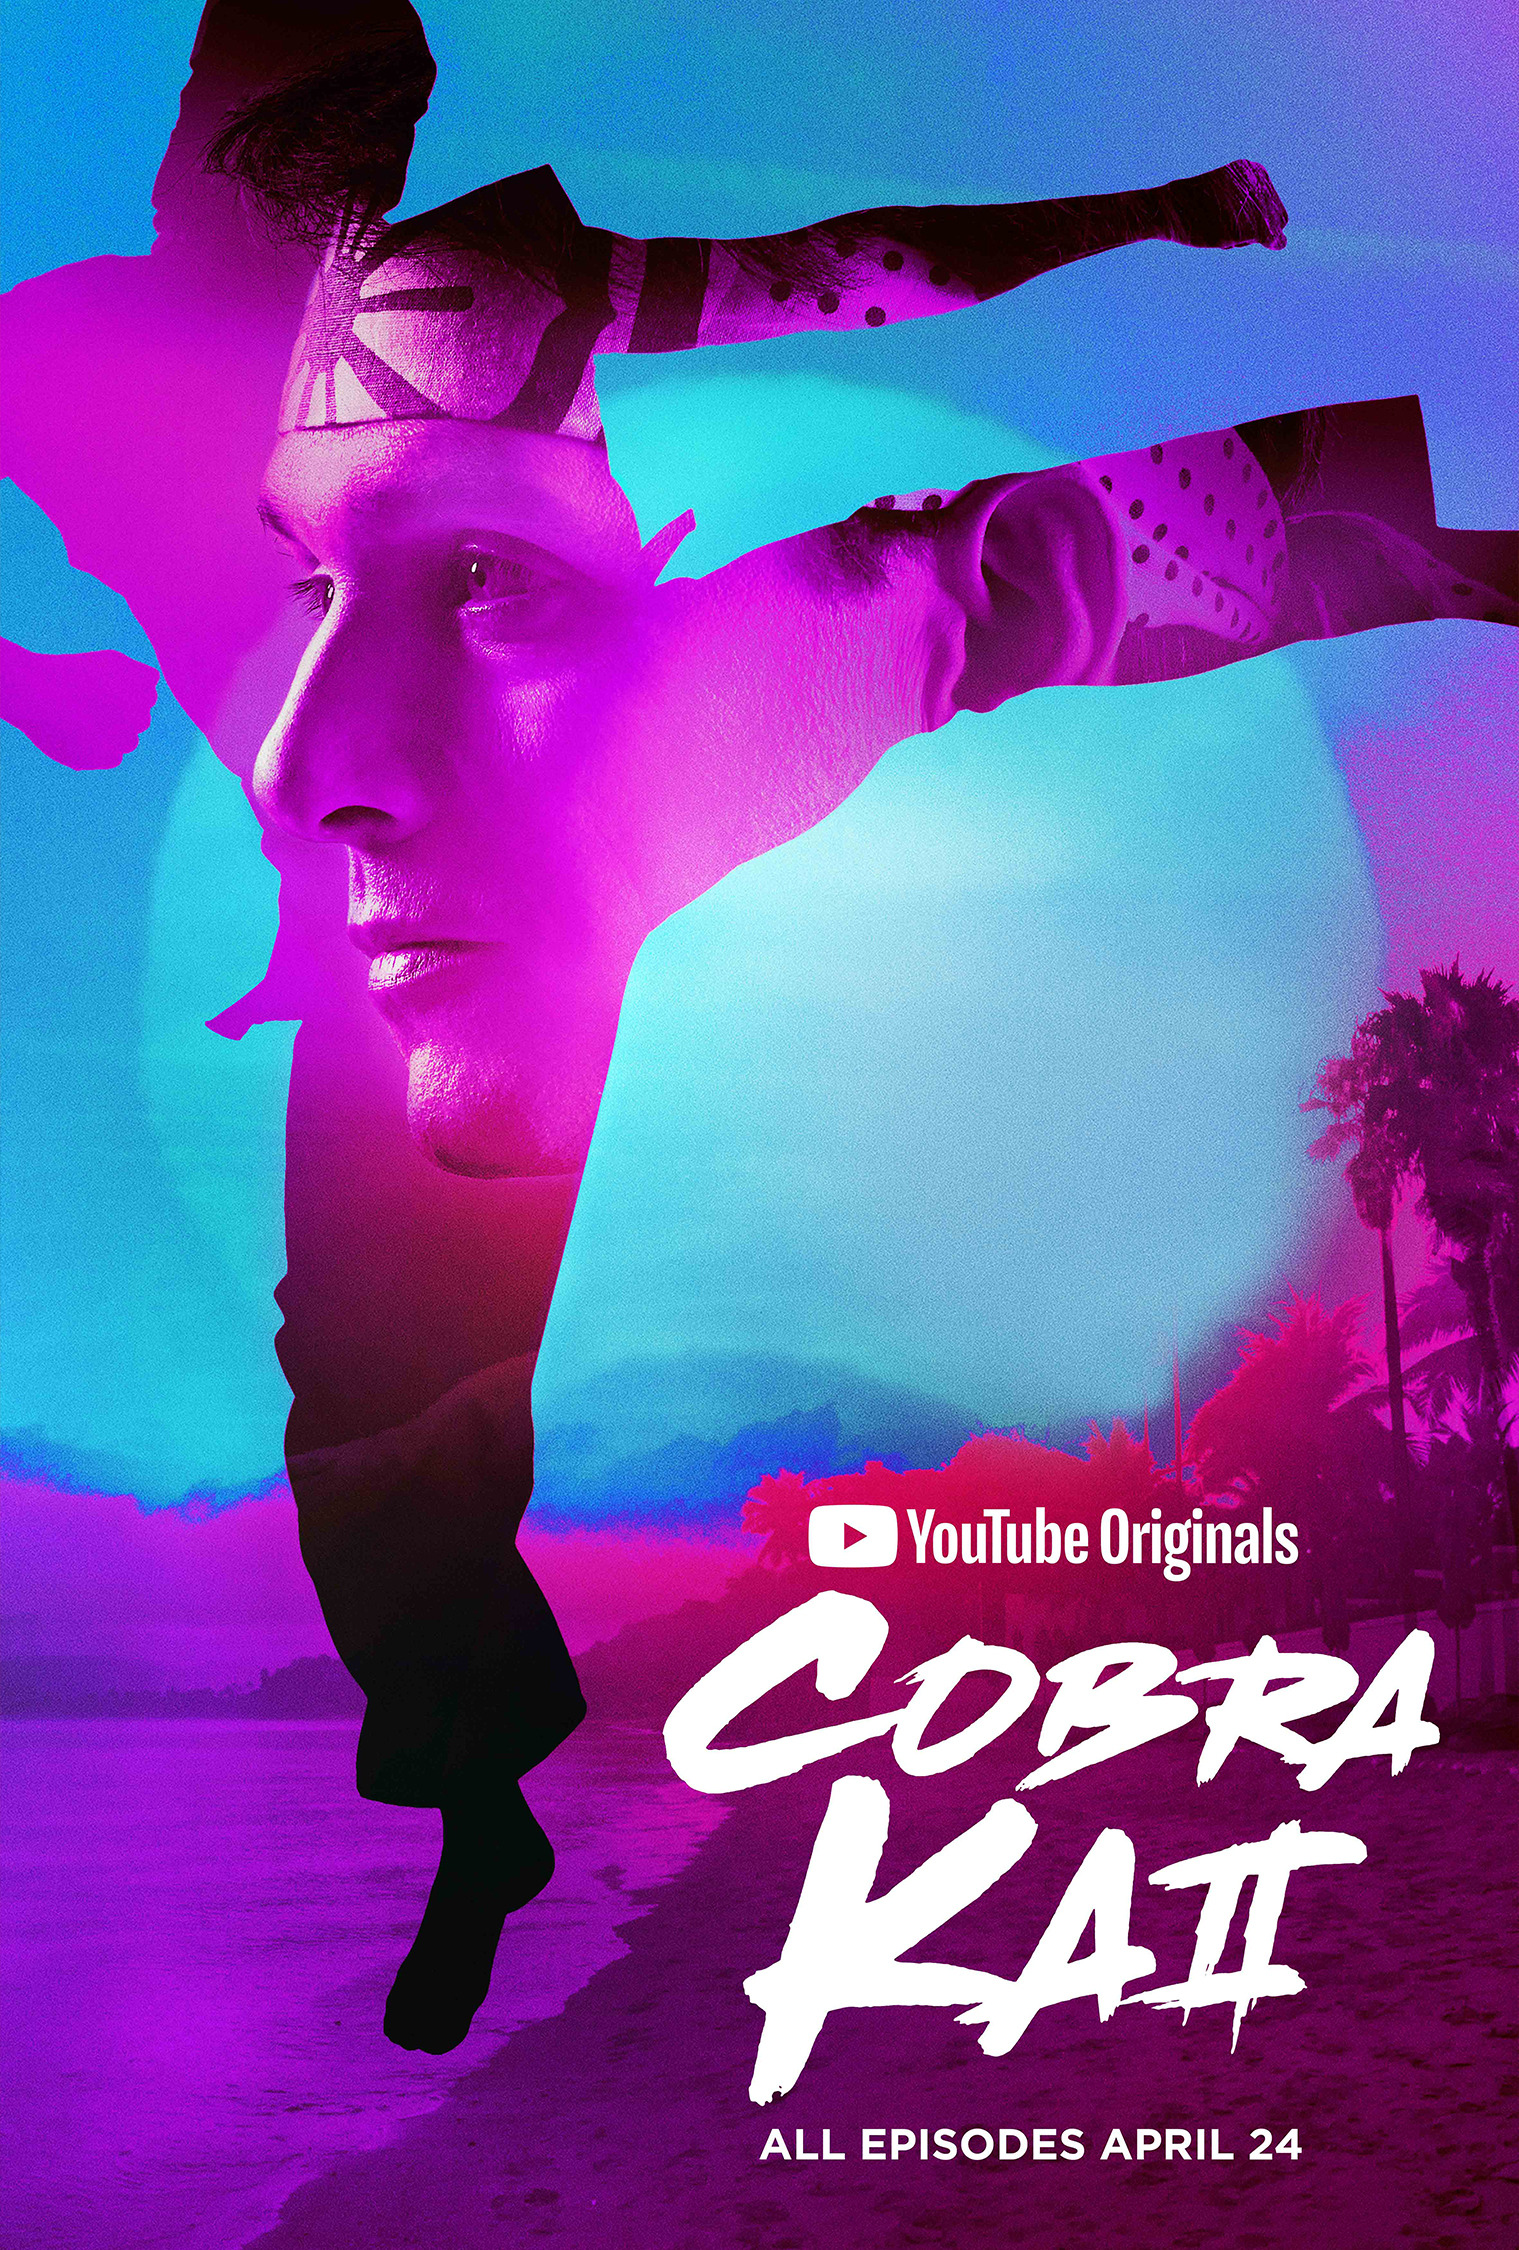 Mega Sized TV Poster Image for Cobra Kai (#5 of 20)